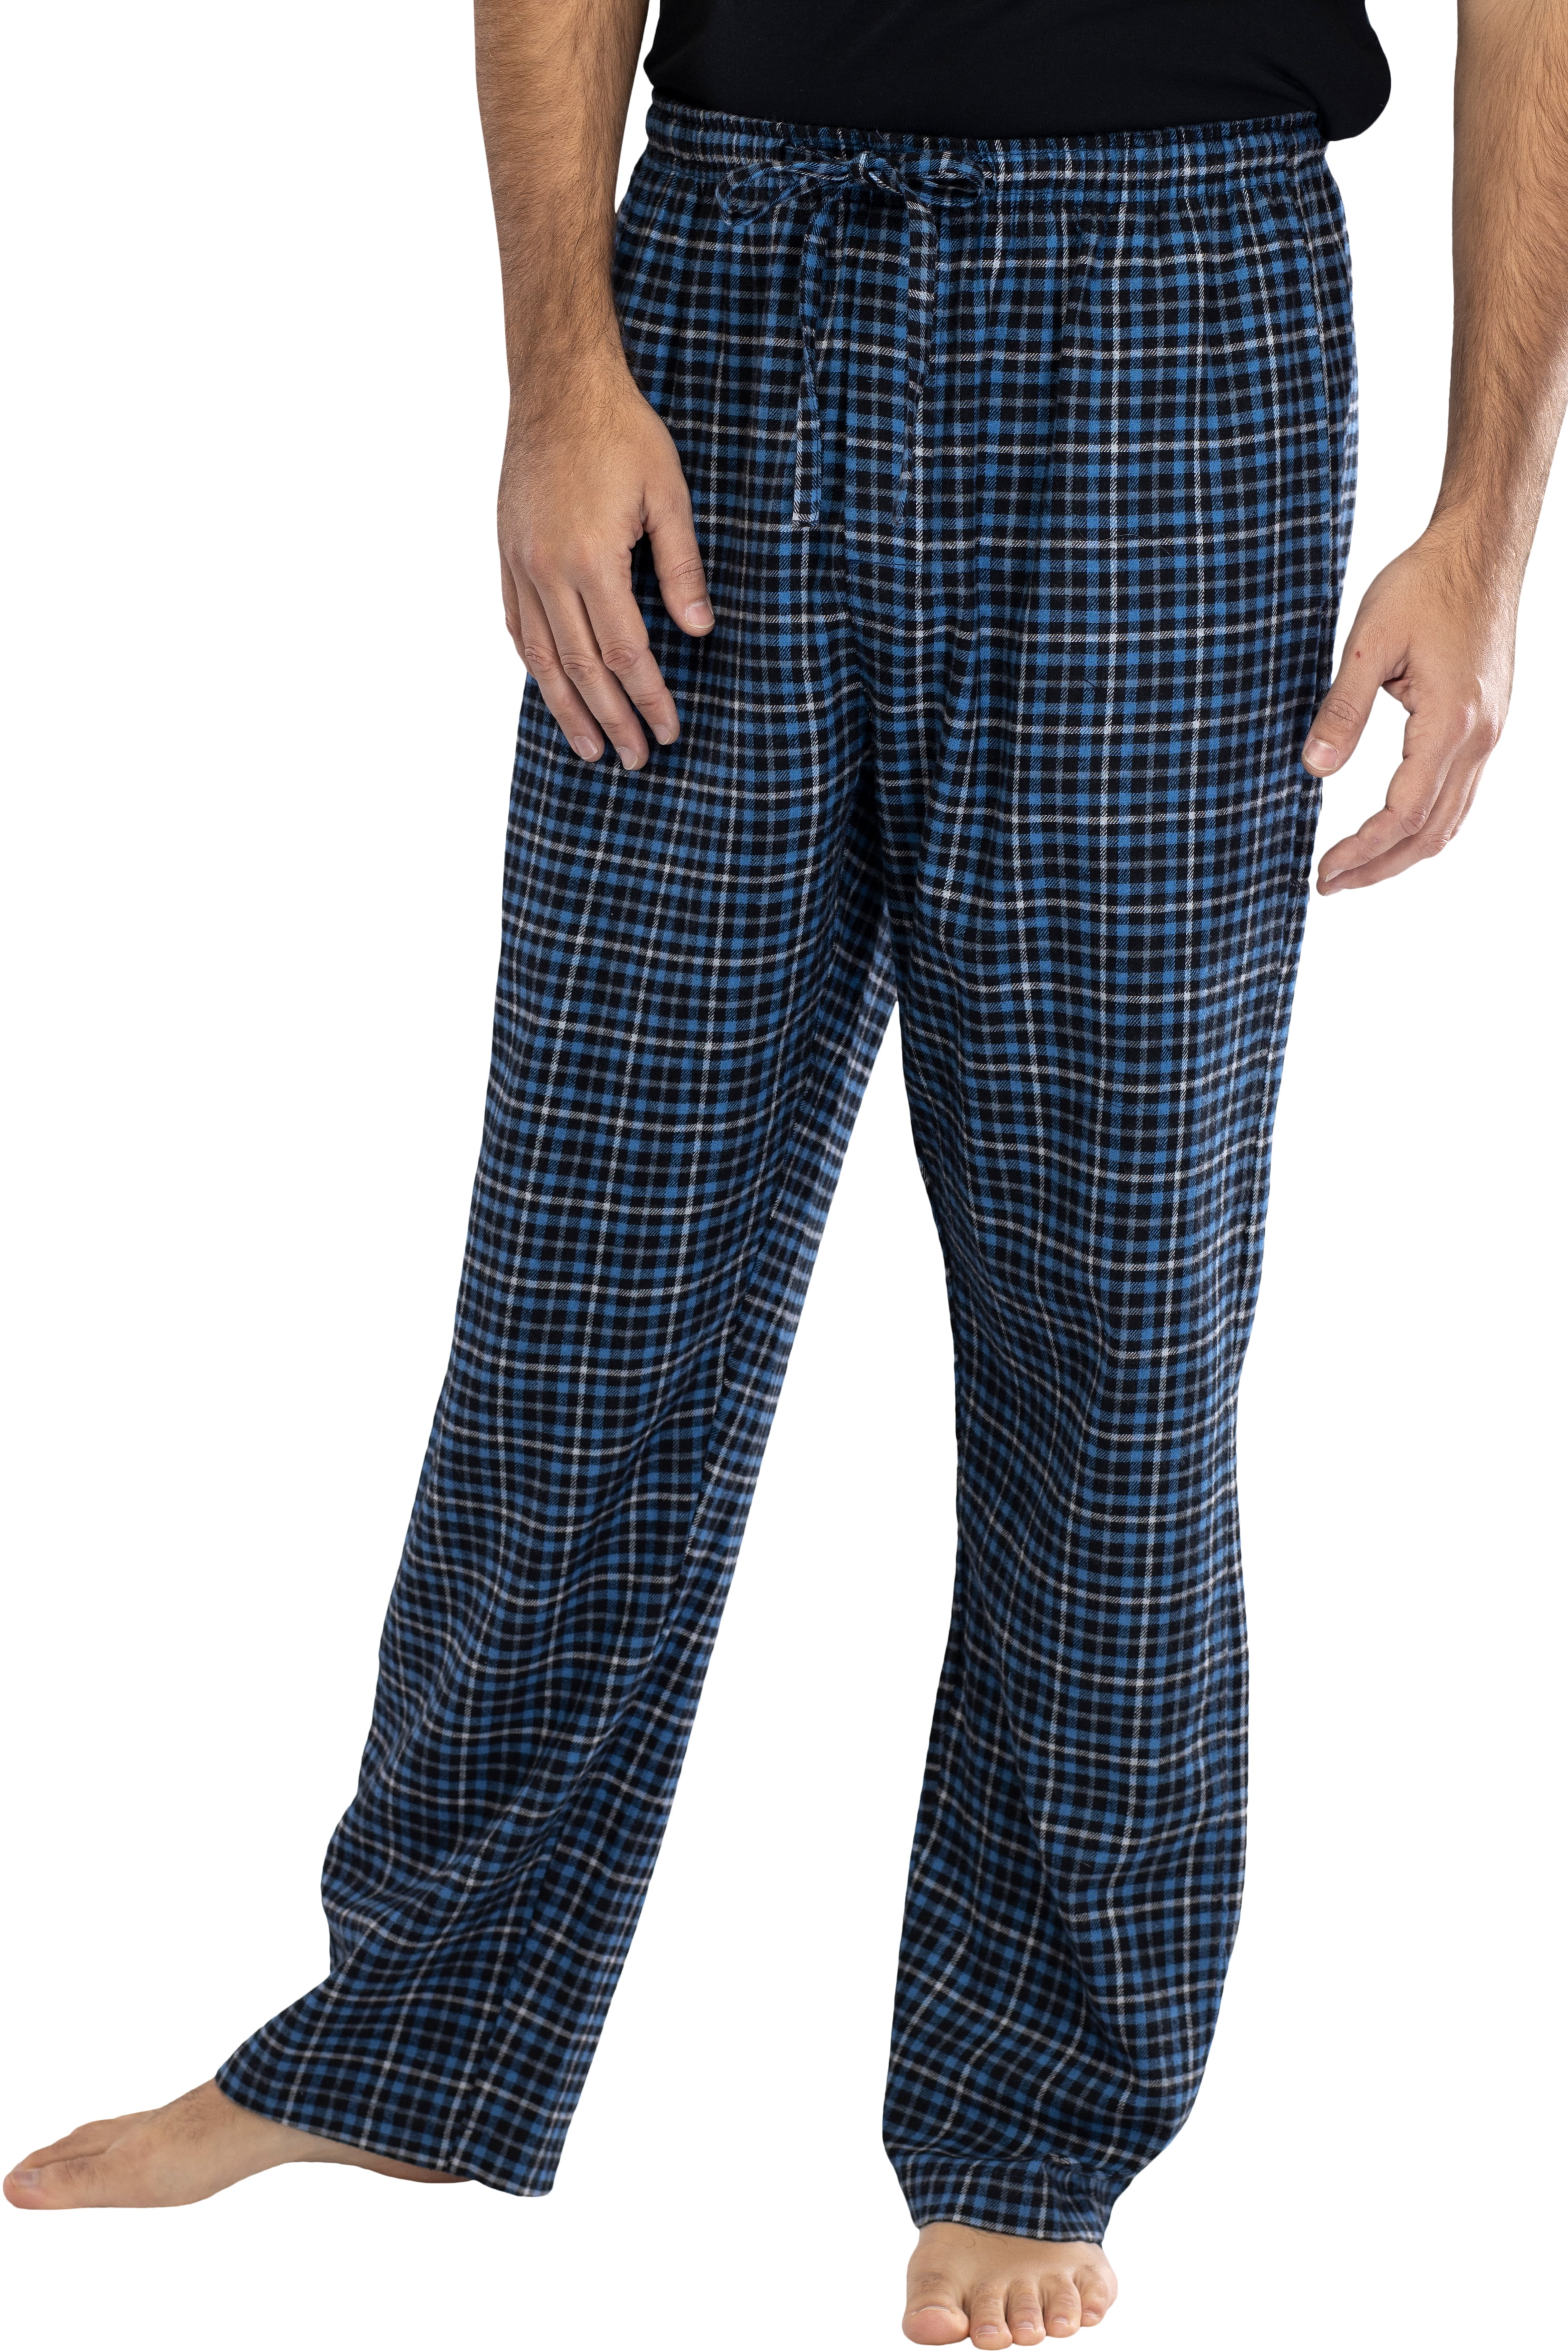 Intimo Mens Store Pajama Flannel Sleep Pants Medium - Walmart.com